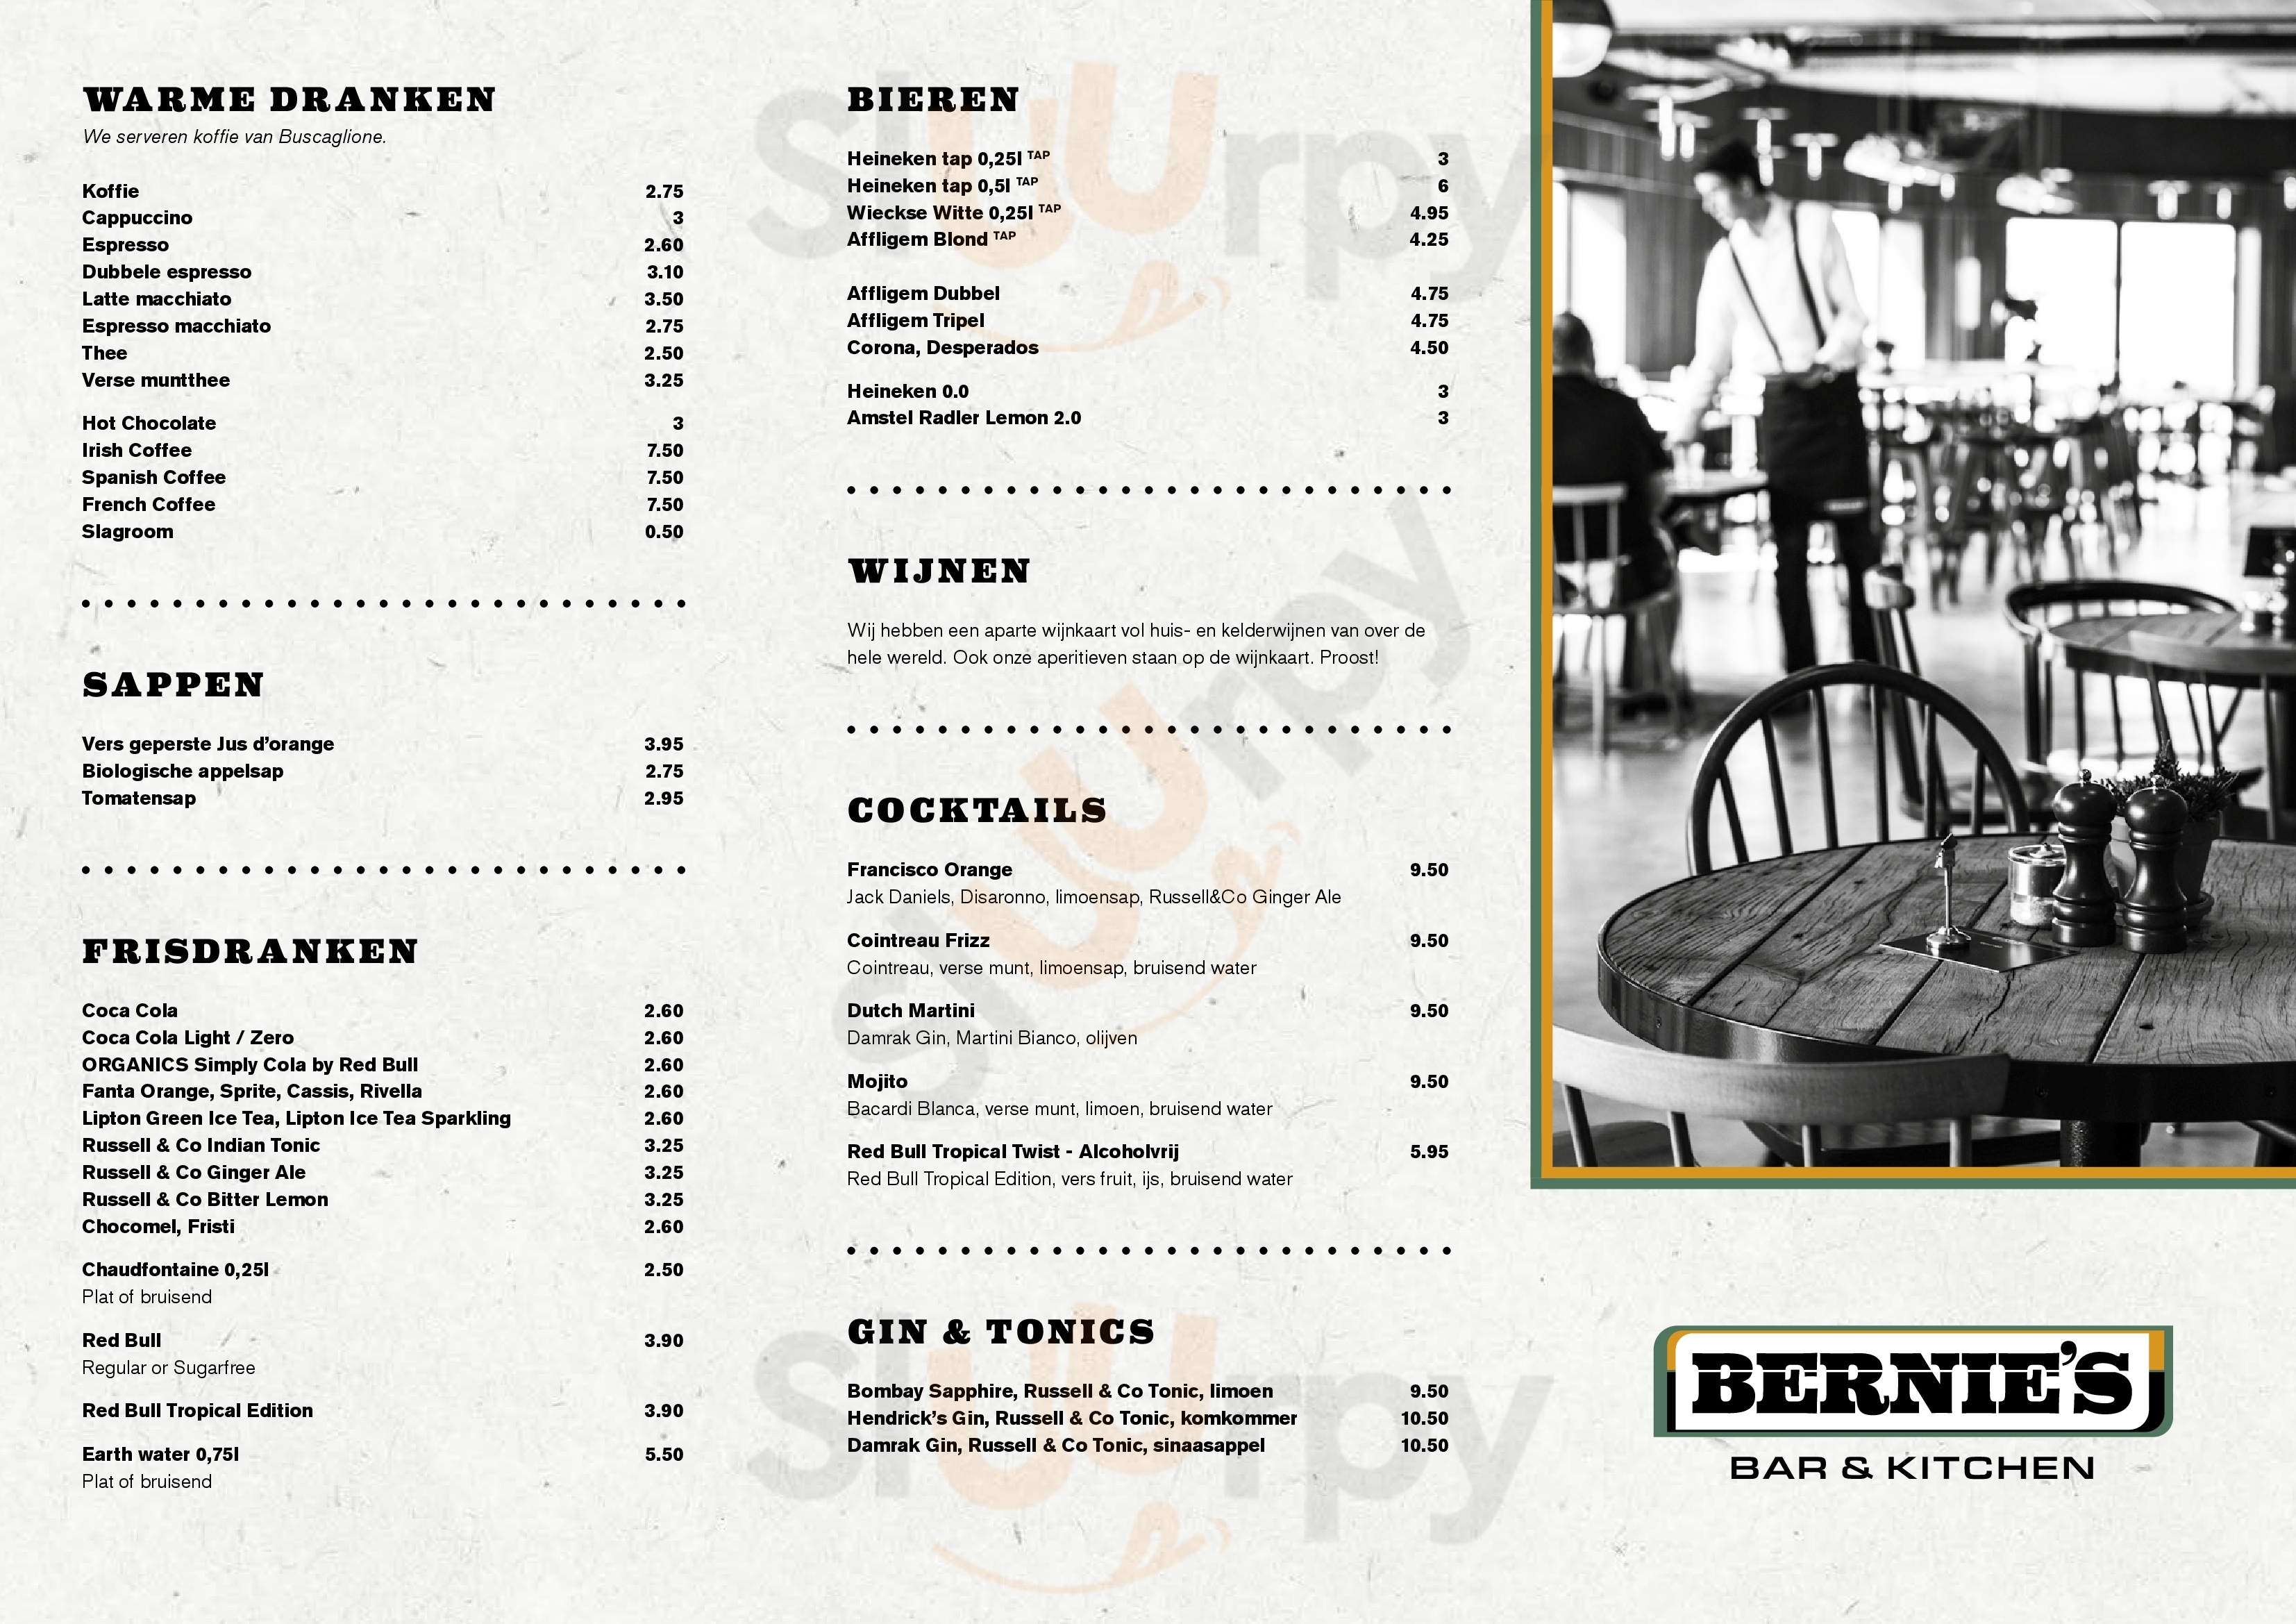 Bernie's Bar & Kitchen Zandvoort Menu - 1